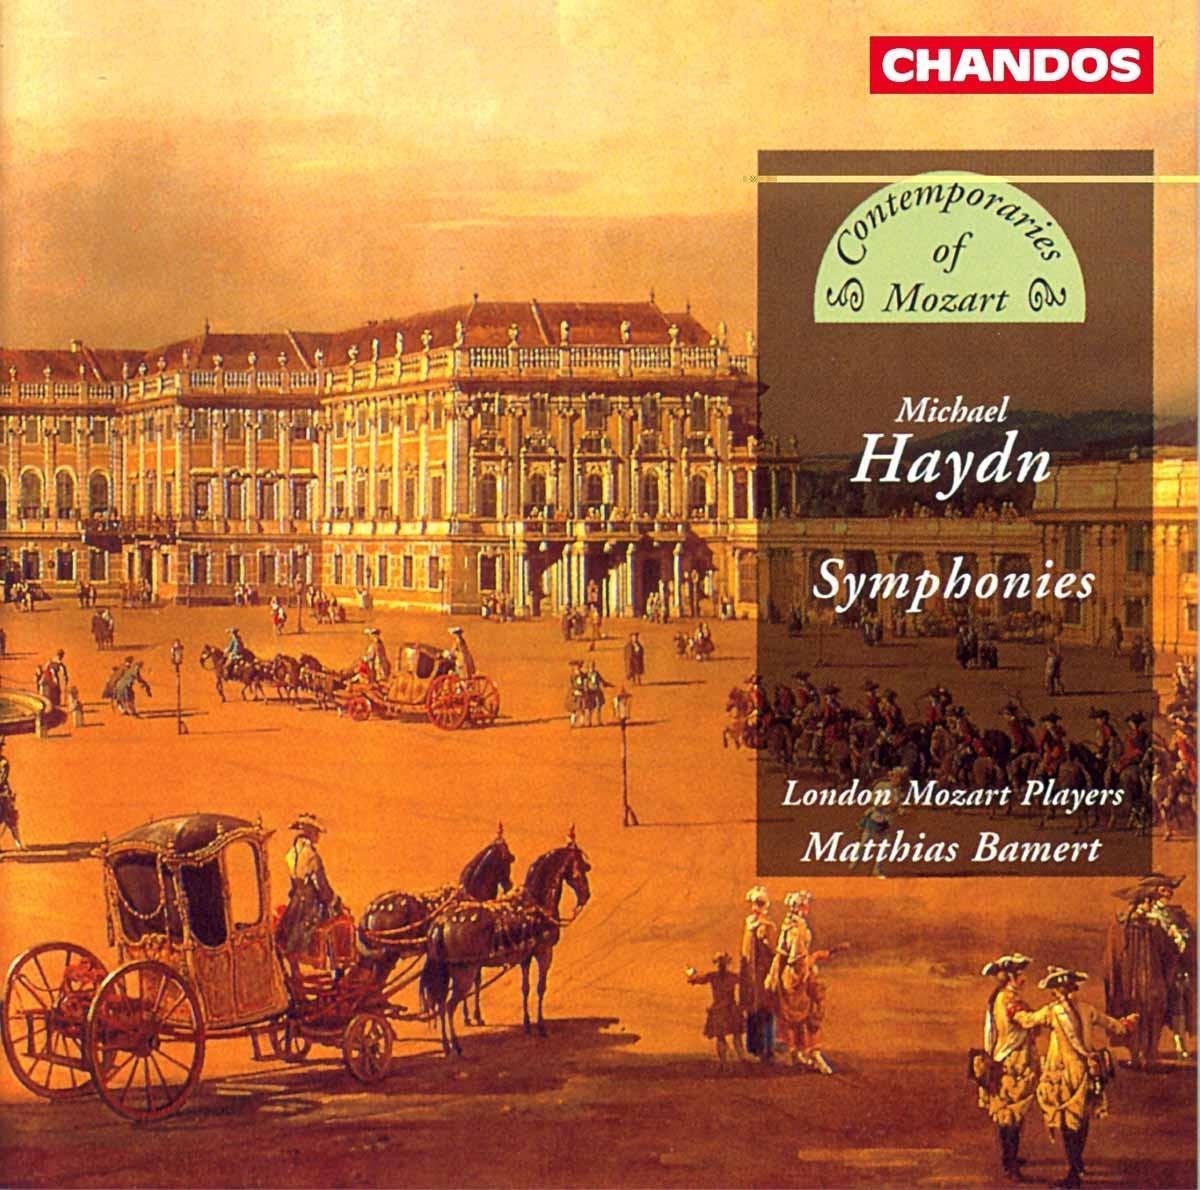 London Mozart Players - Symphonies (CD) - London Mozart Players, Matthias Bamert